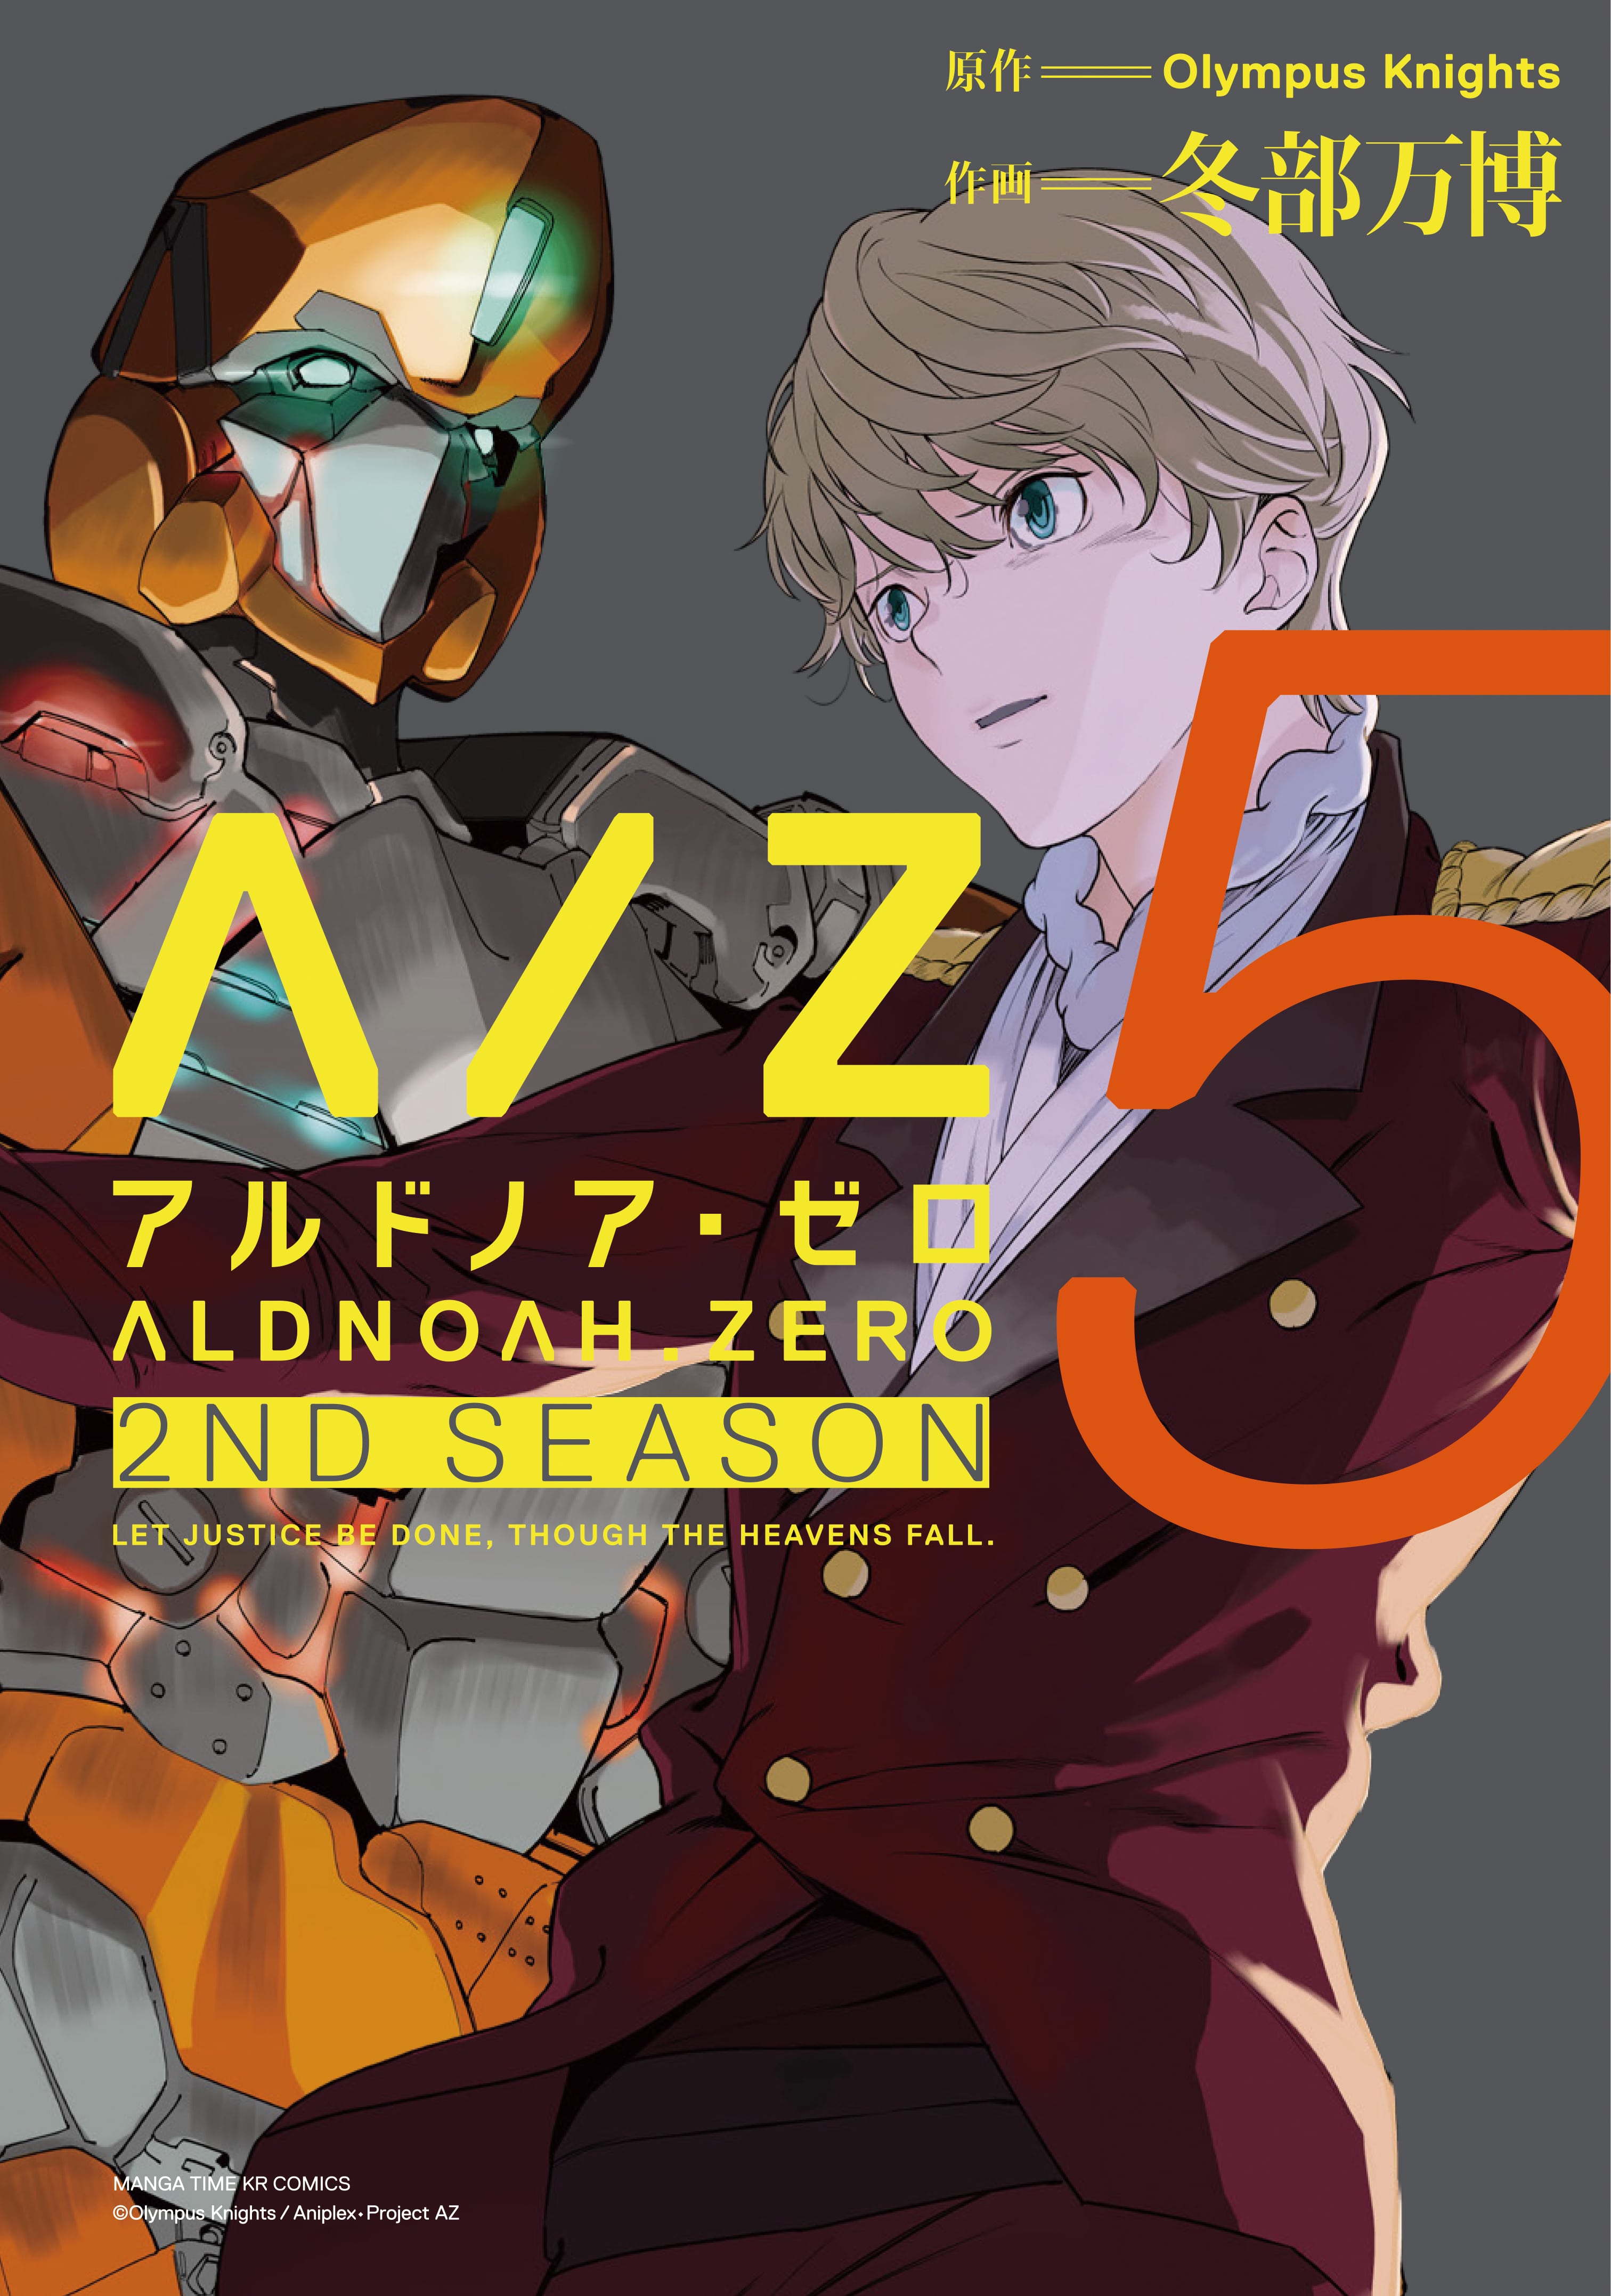 Aldnoah.Zero 2nd Season  Manga, Manga covers, Seasons